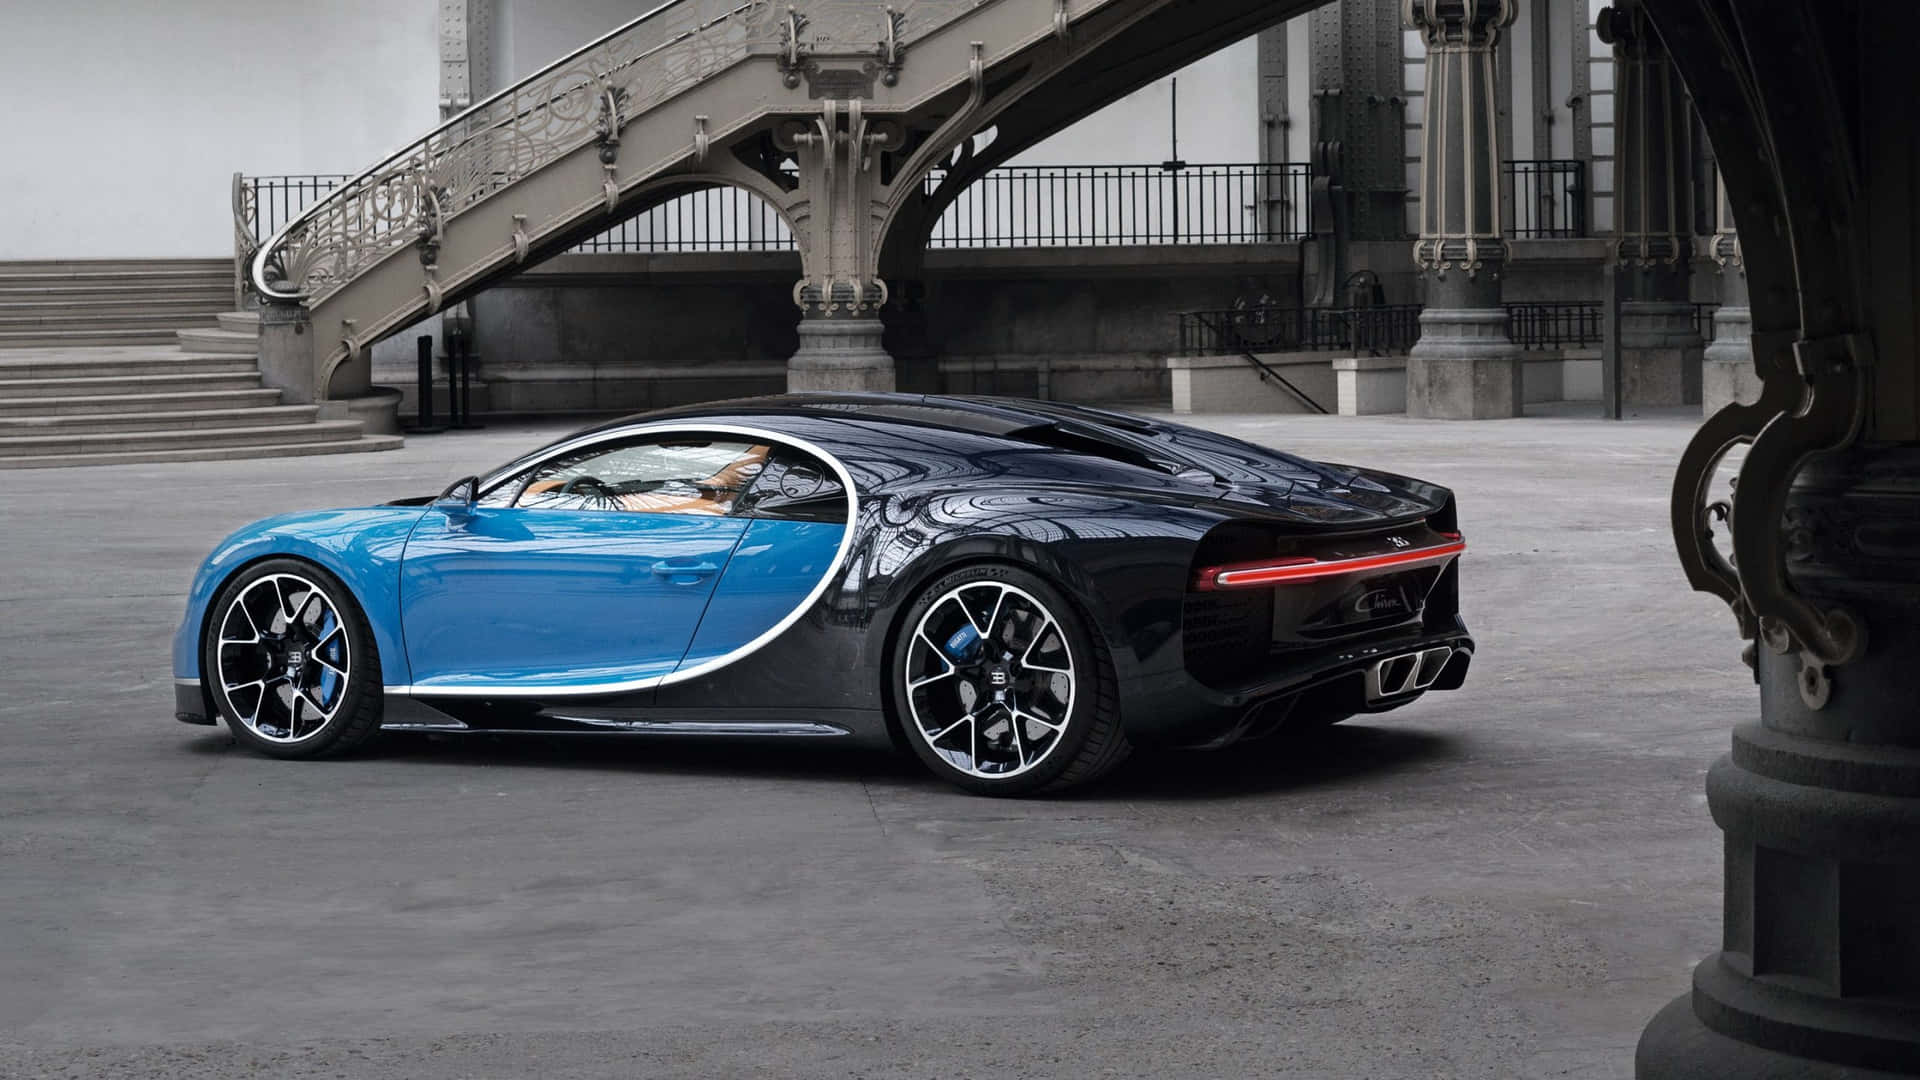 Stunning Bugatti Chiron showcased under the moonlight Wallpaper